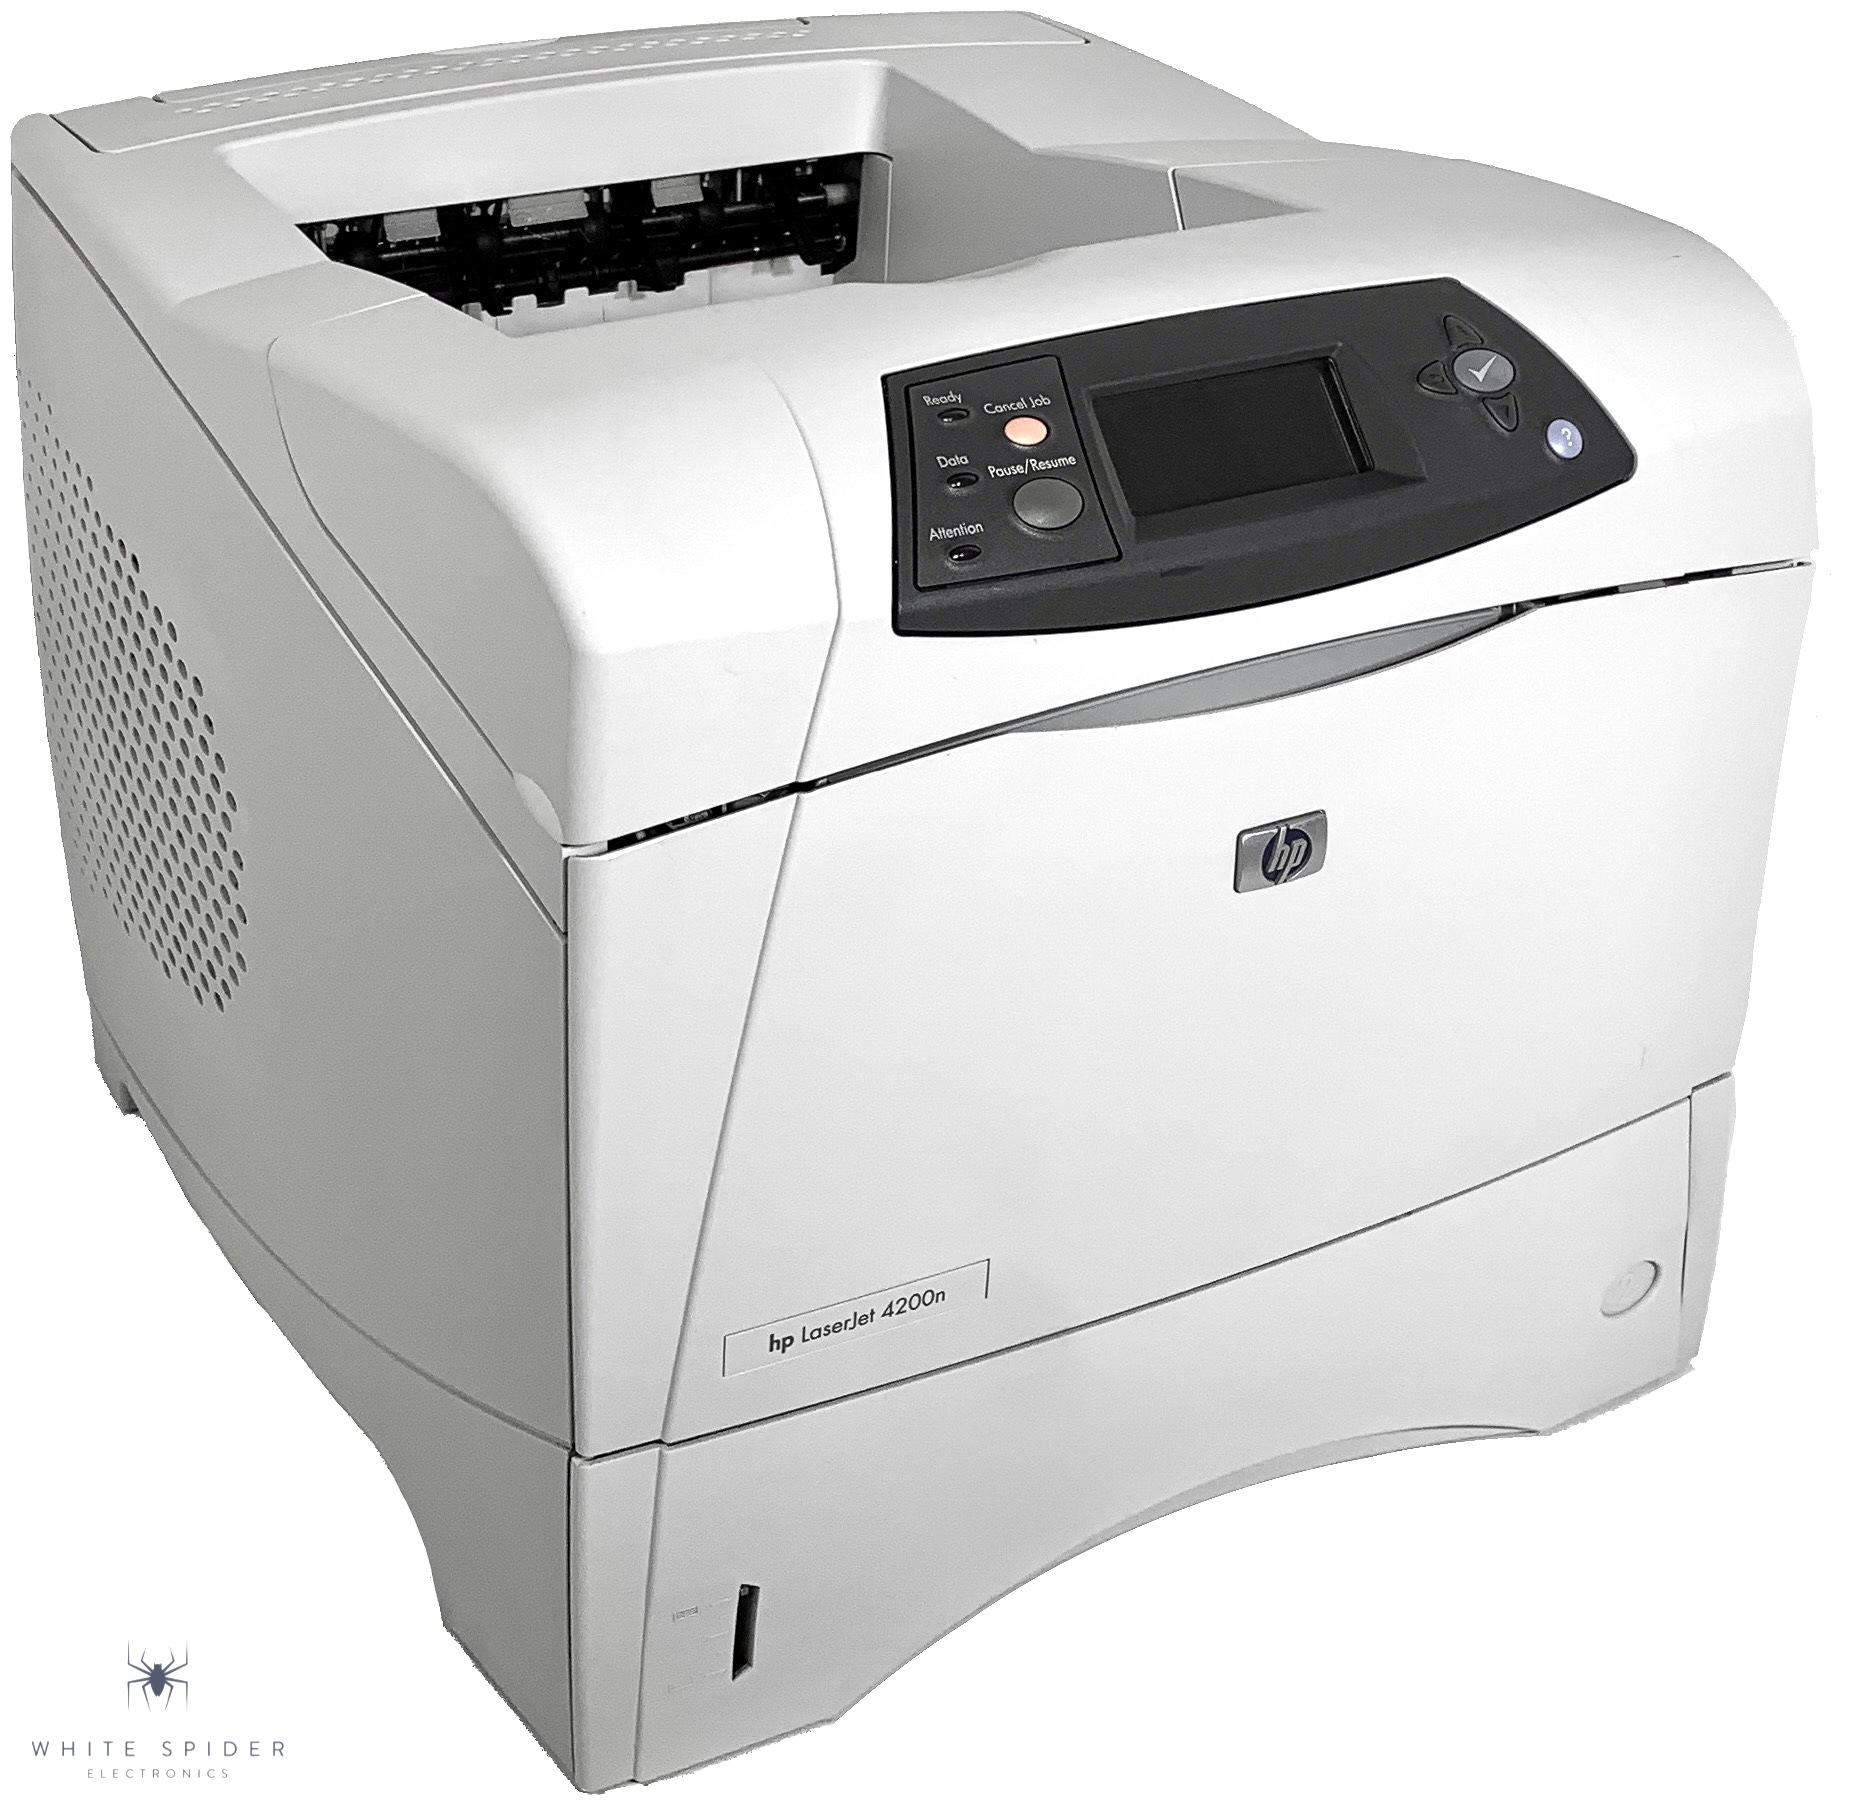 kartoffel sne kat HP LaserJet 4200N Network Laser Printer Q2426A - White Spider Electronics